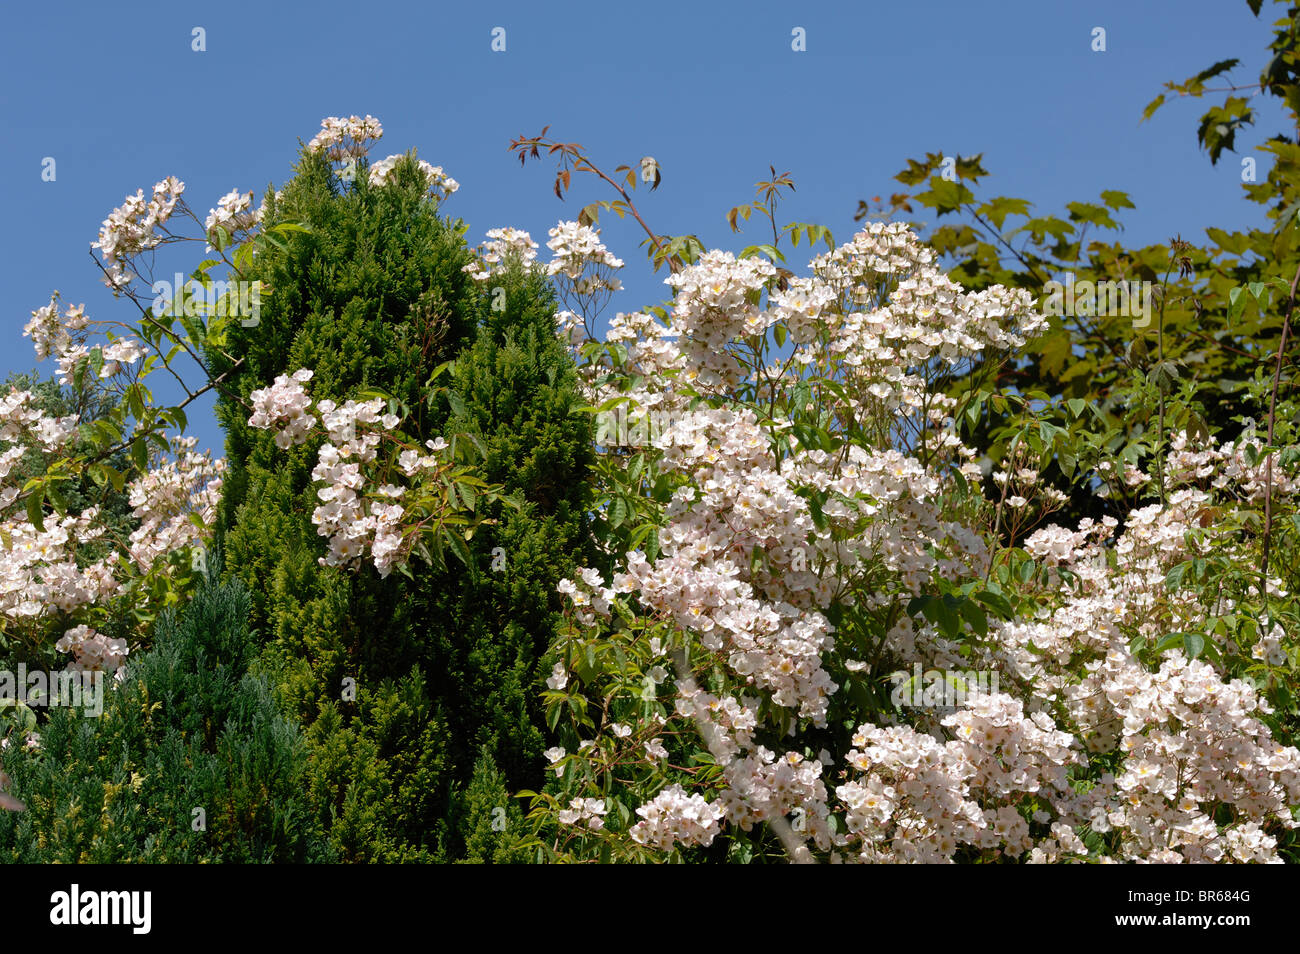 Rosa filipes 'Kiftsgate' climbing rose drifting over ornamental conifers Stock Photo